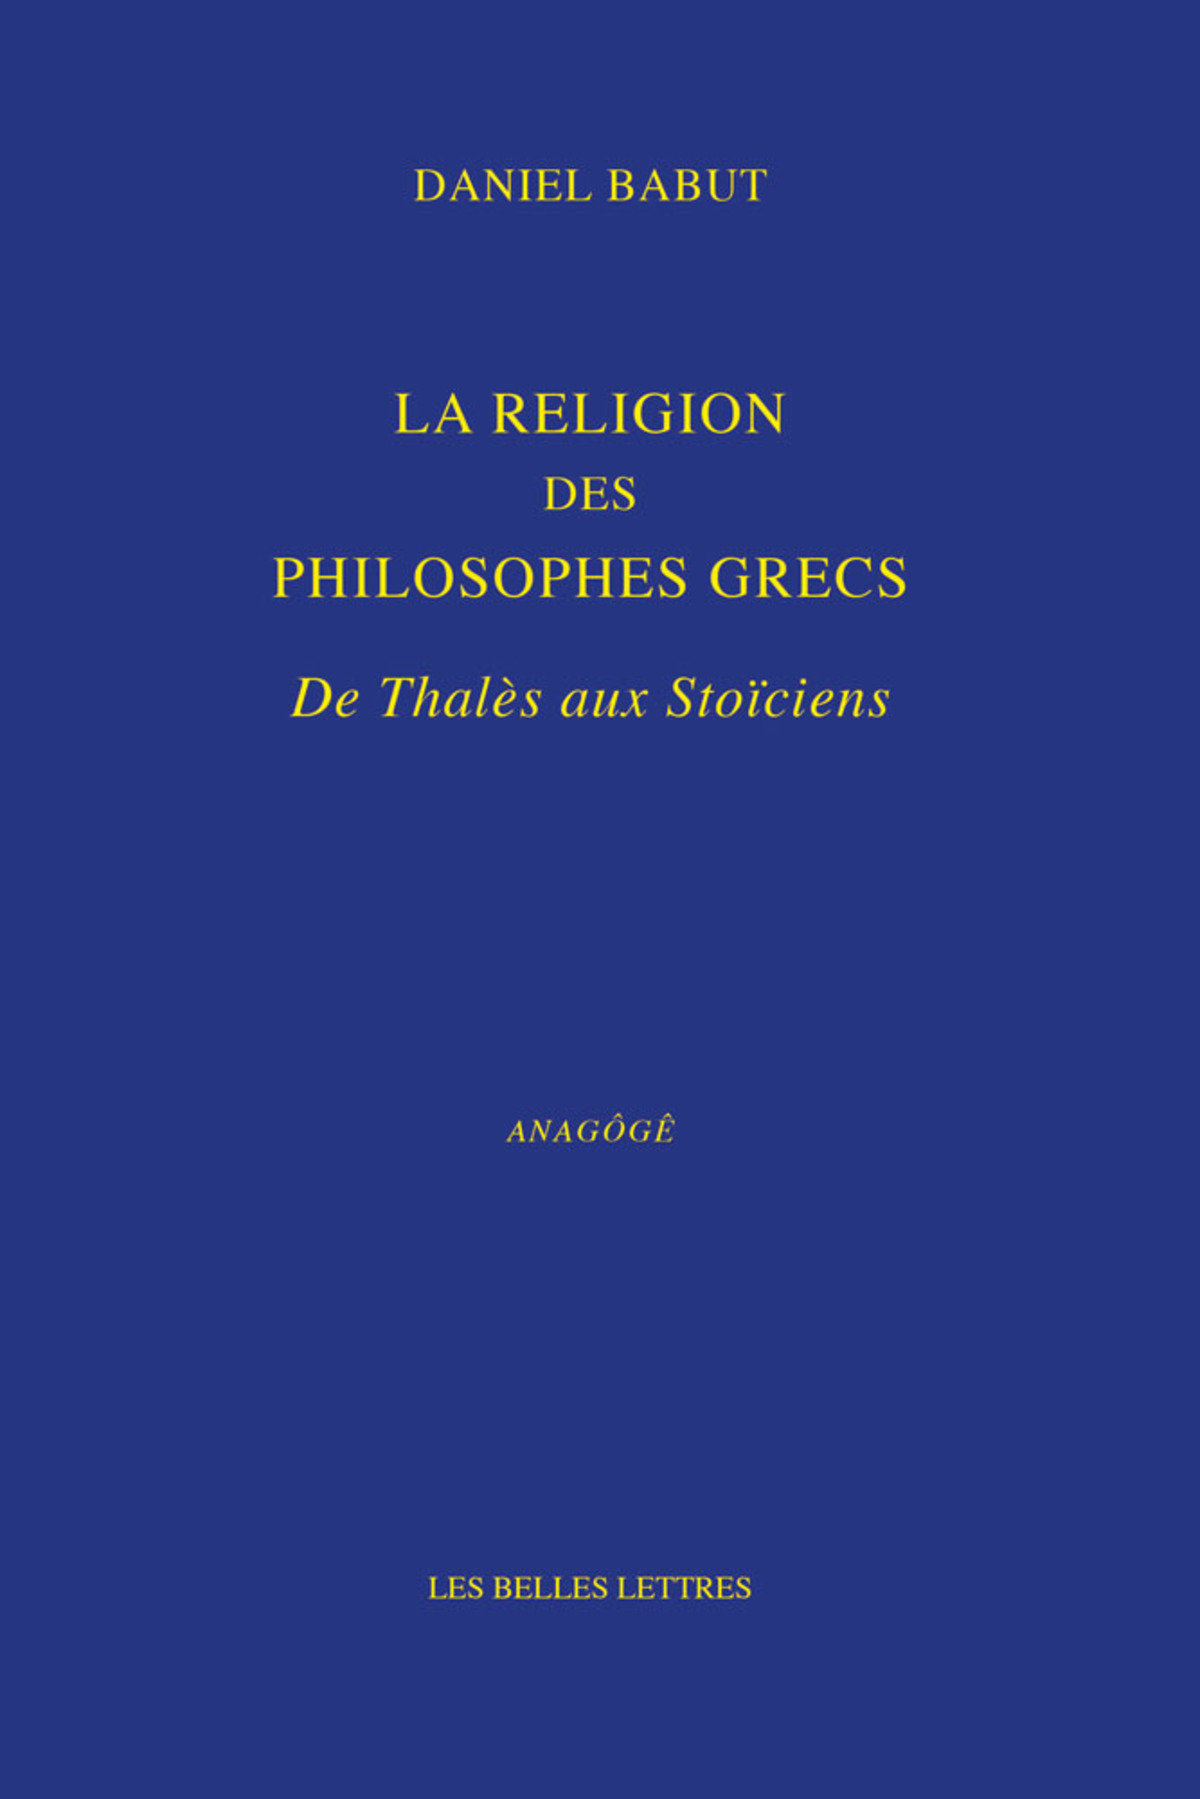 La Religion des philosophes grecs